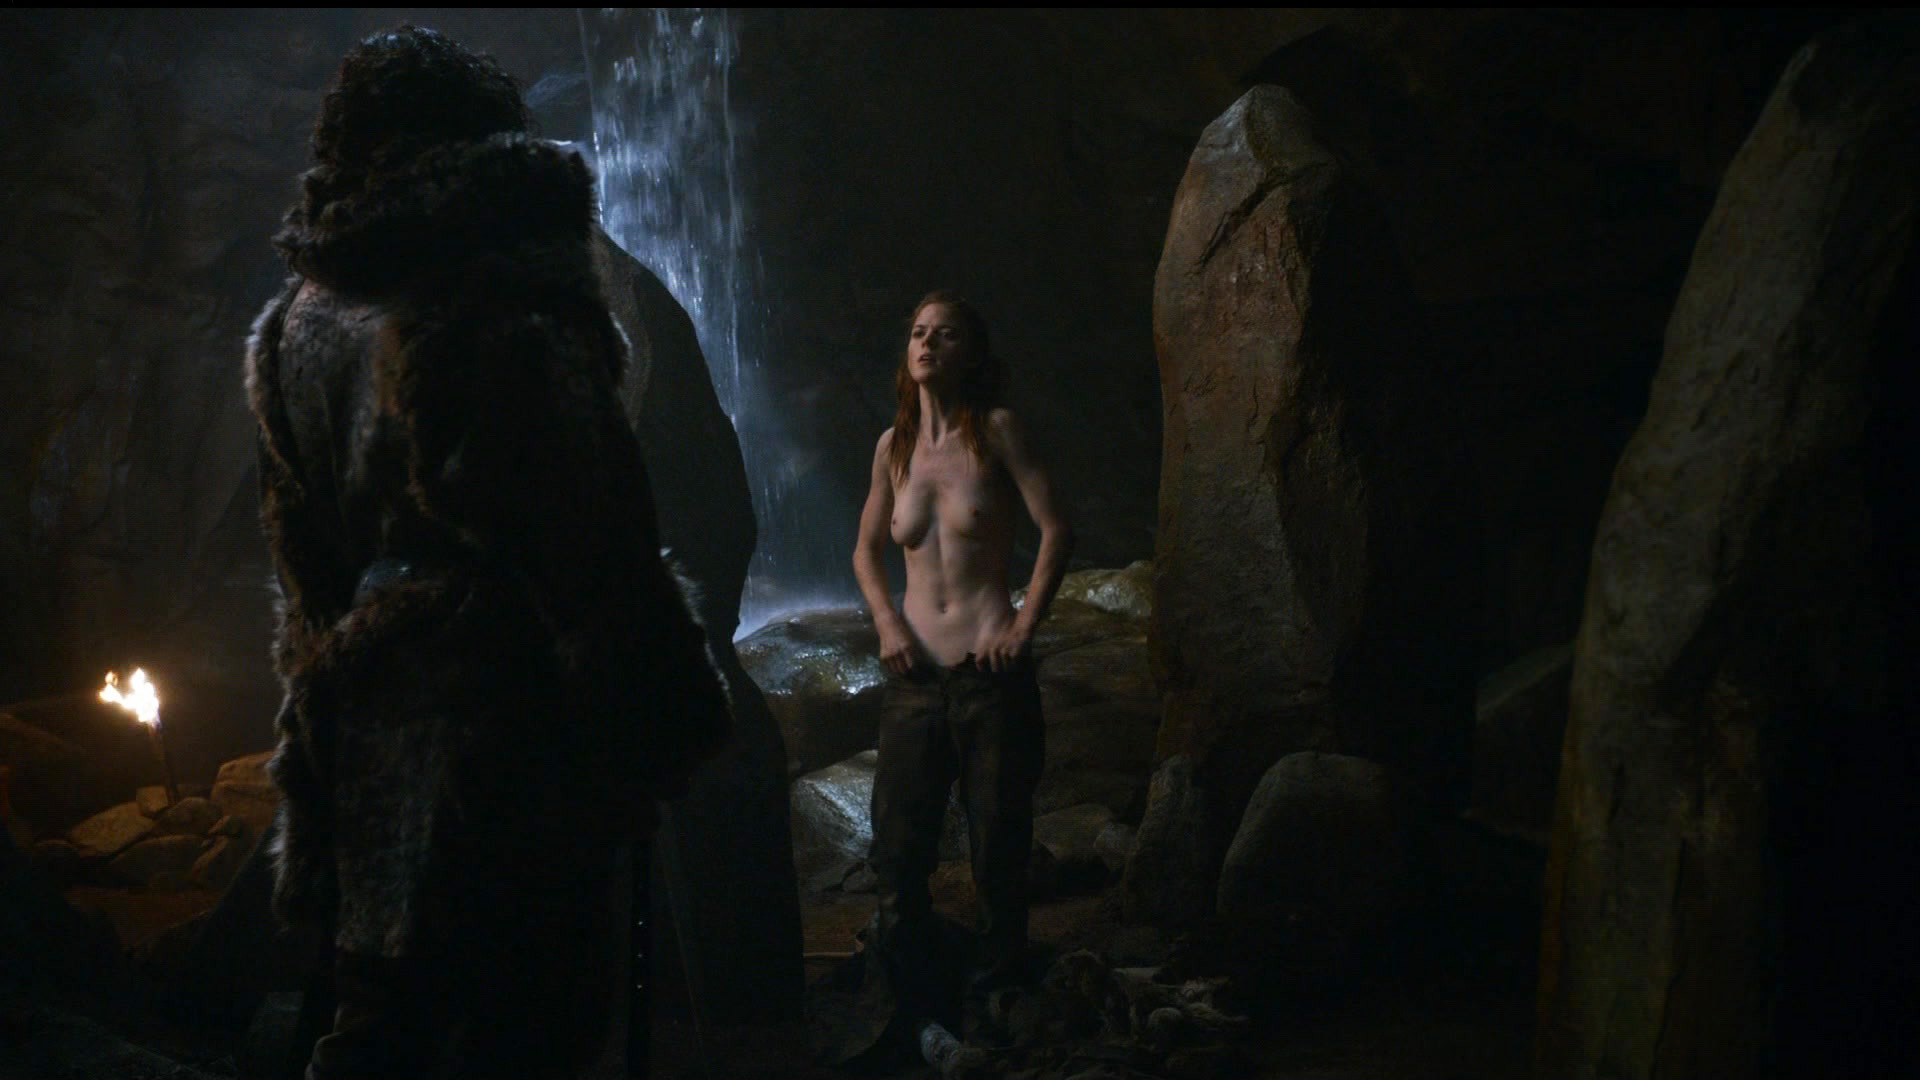 Game of Thrones Nude Scenes. 